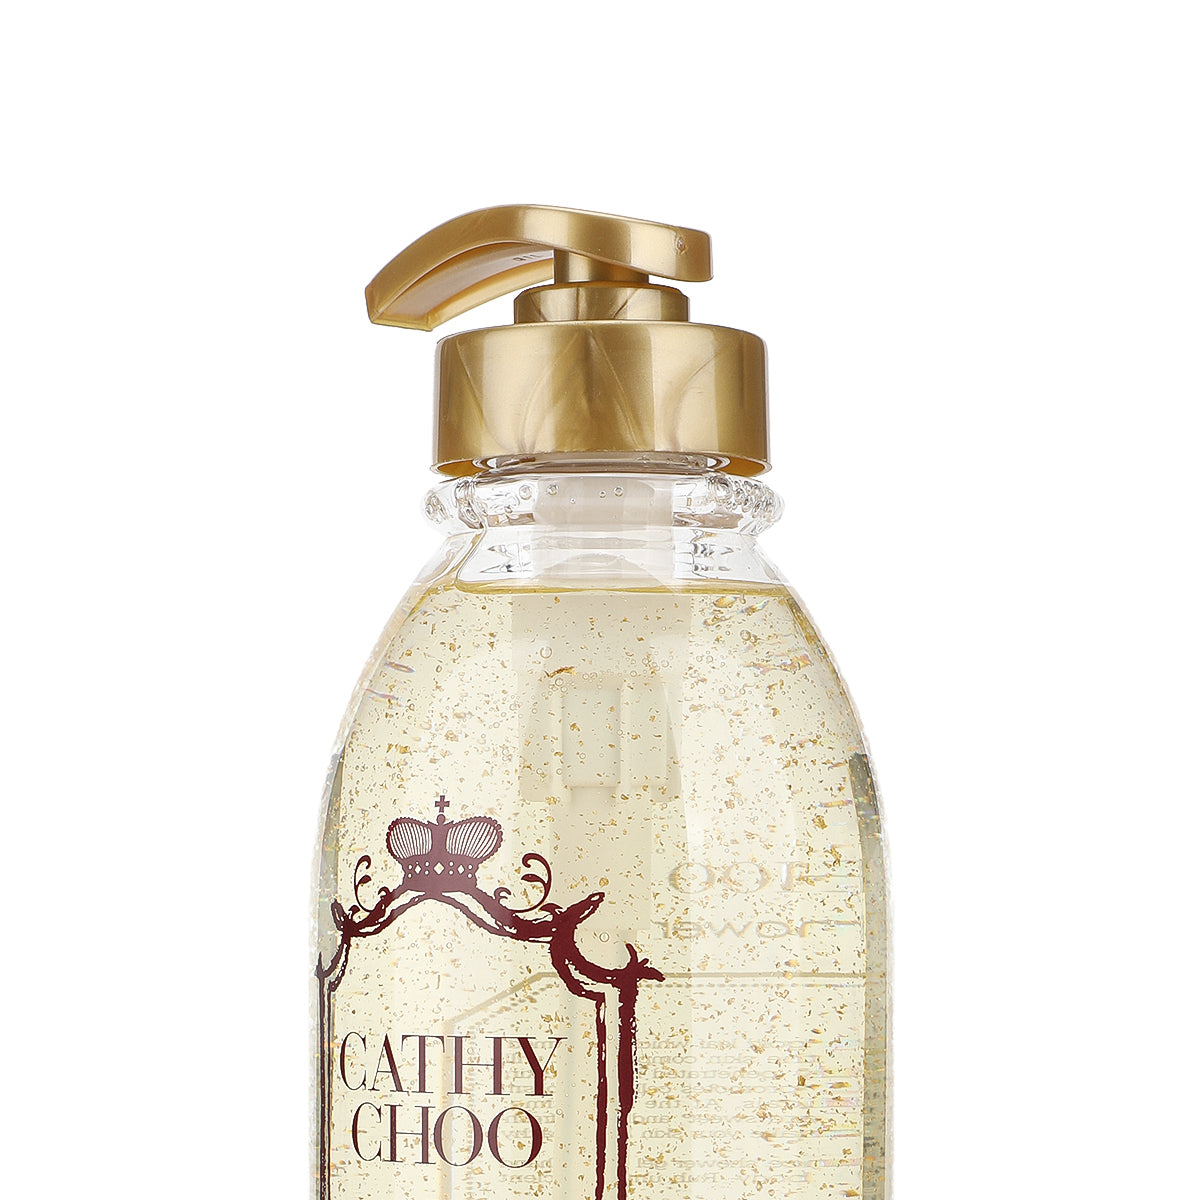 Cathy Choo 24K Active Gold Fragrance Shower Gel - 750ml